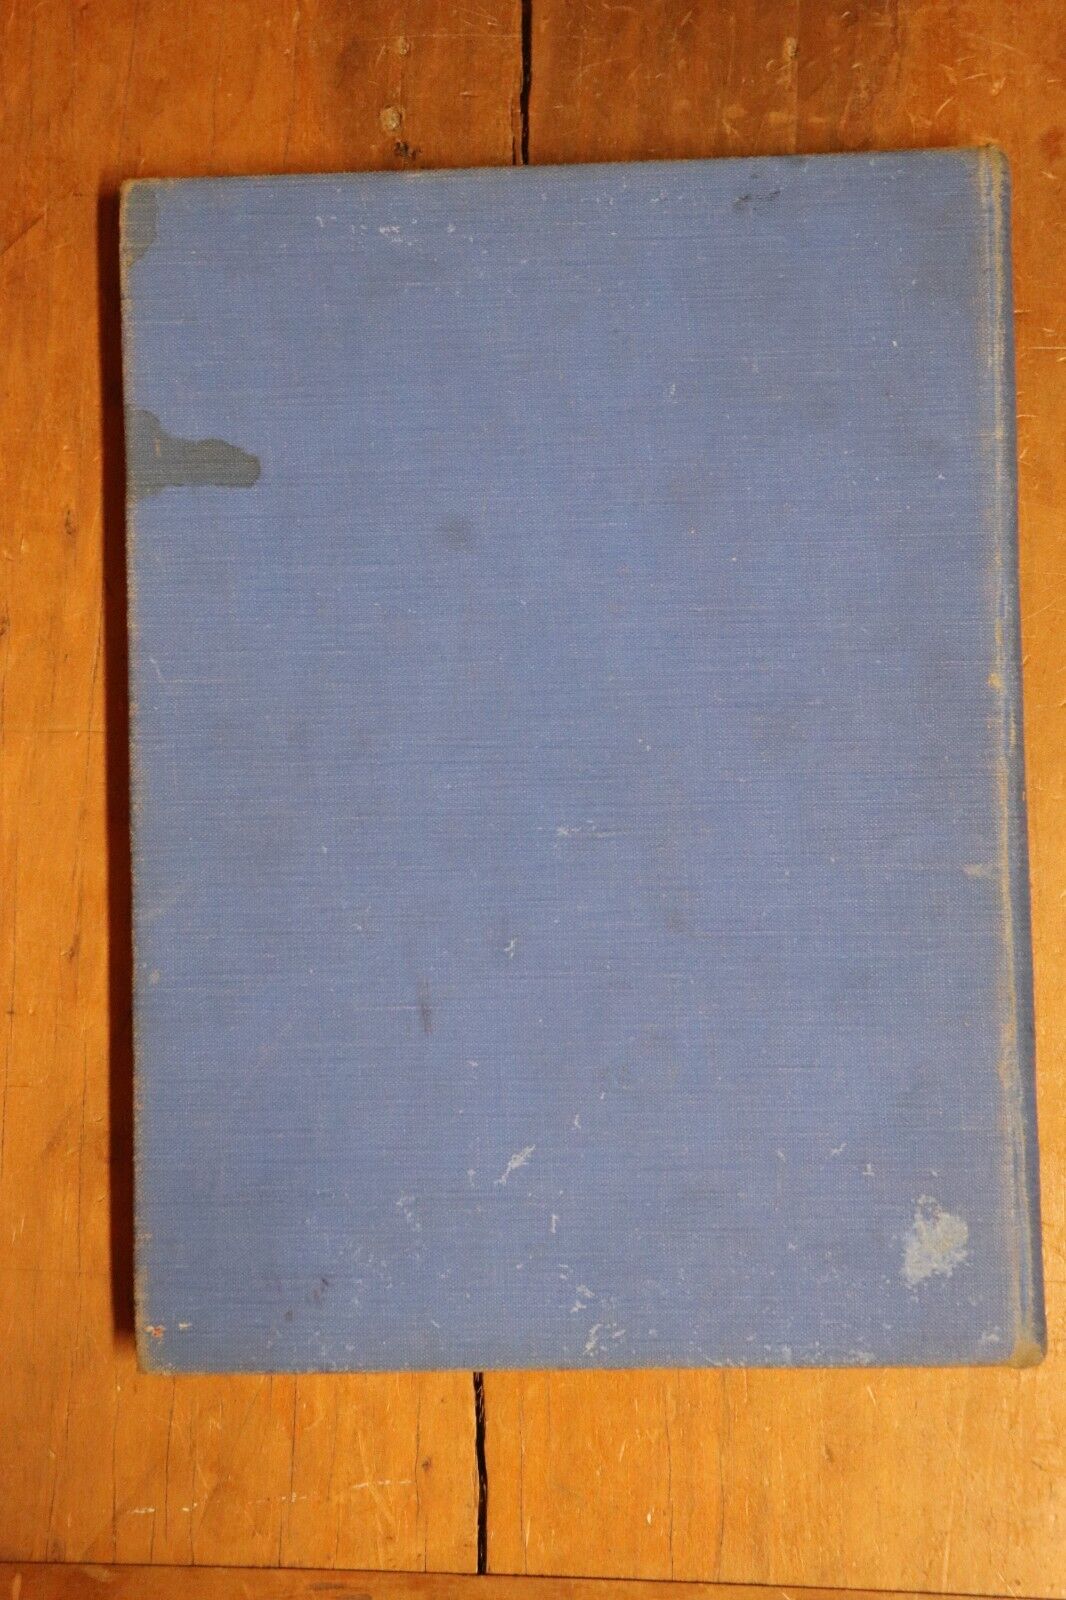 Alfred Wallis Primitive by Sven Berlin - 1949 - 1st Edition - English Artist